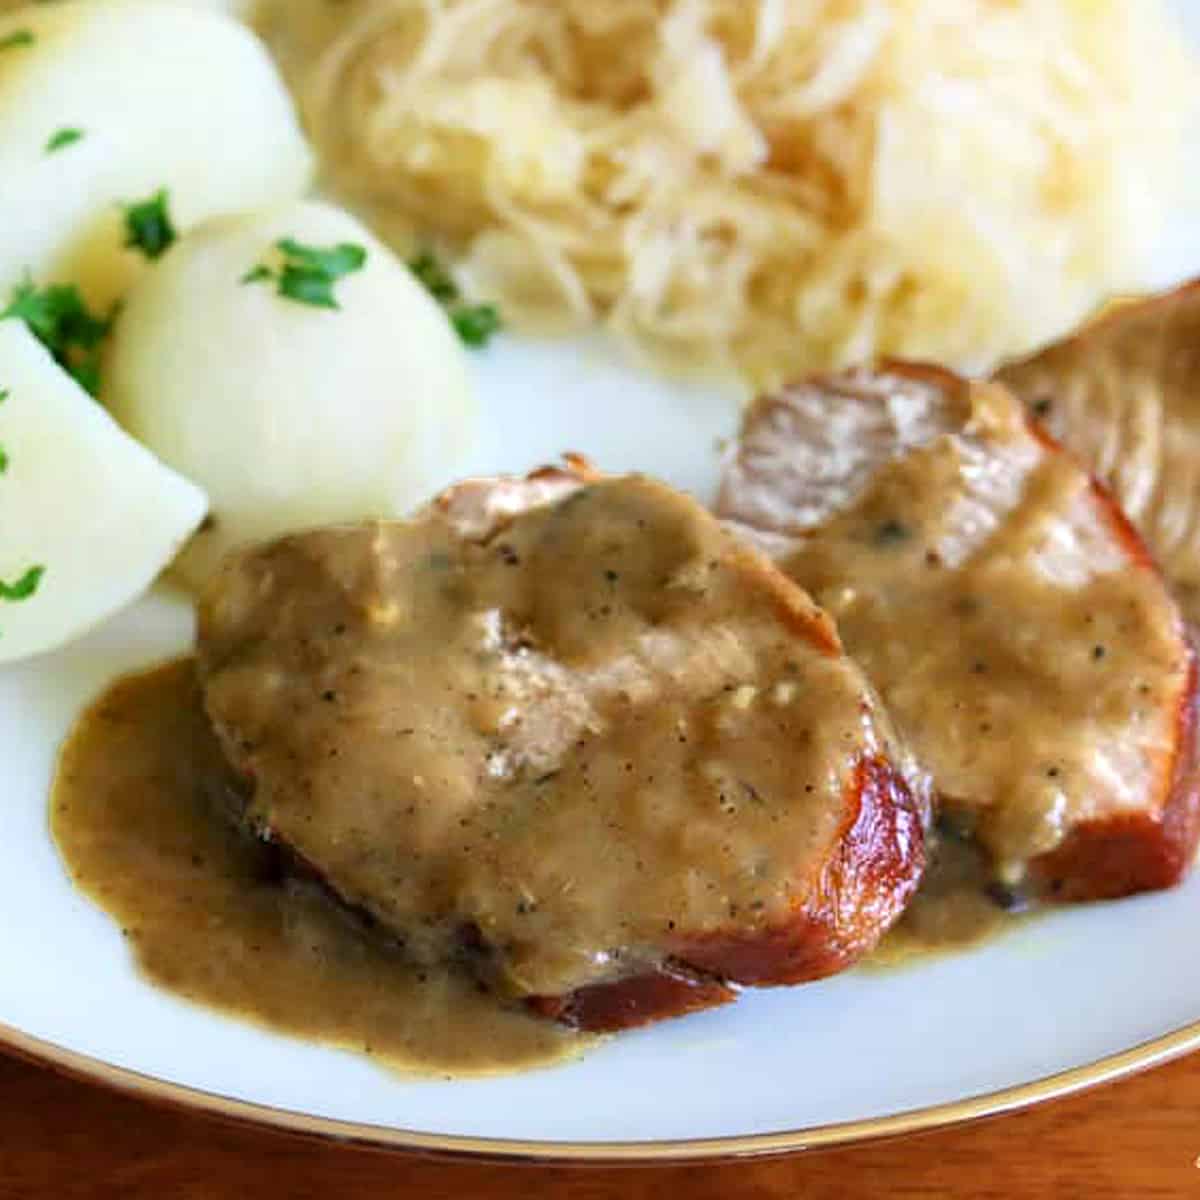 senfbraten recipe german roast pork with mustard gravy traditional authentic